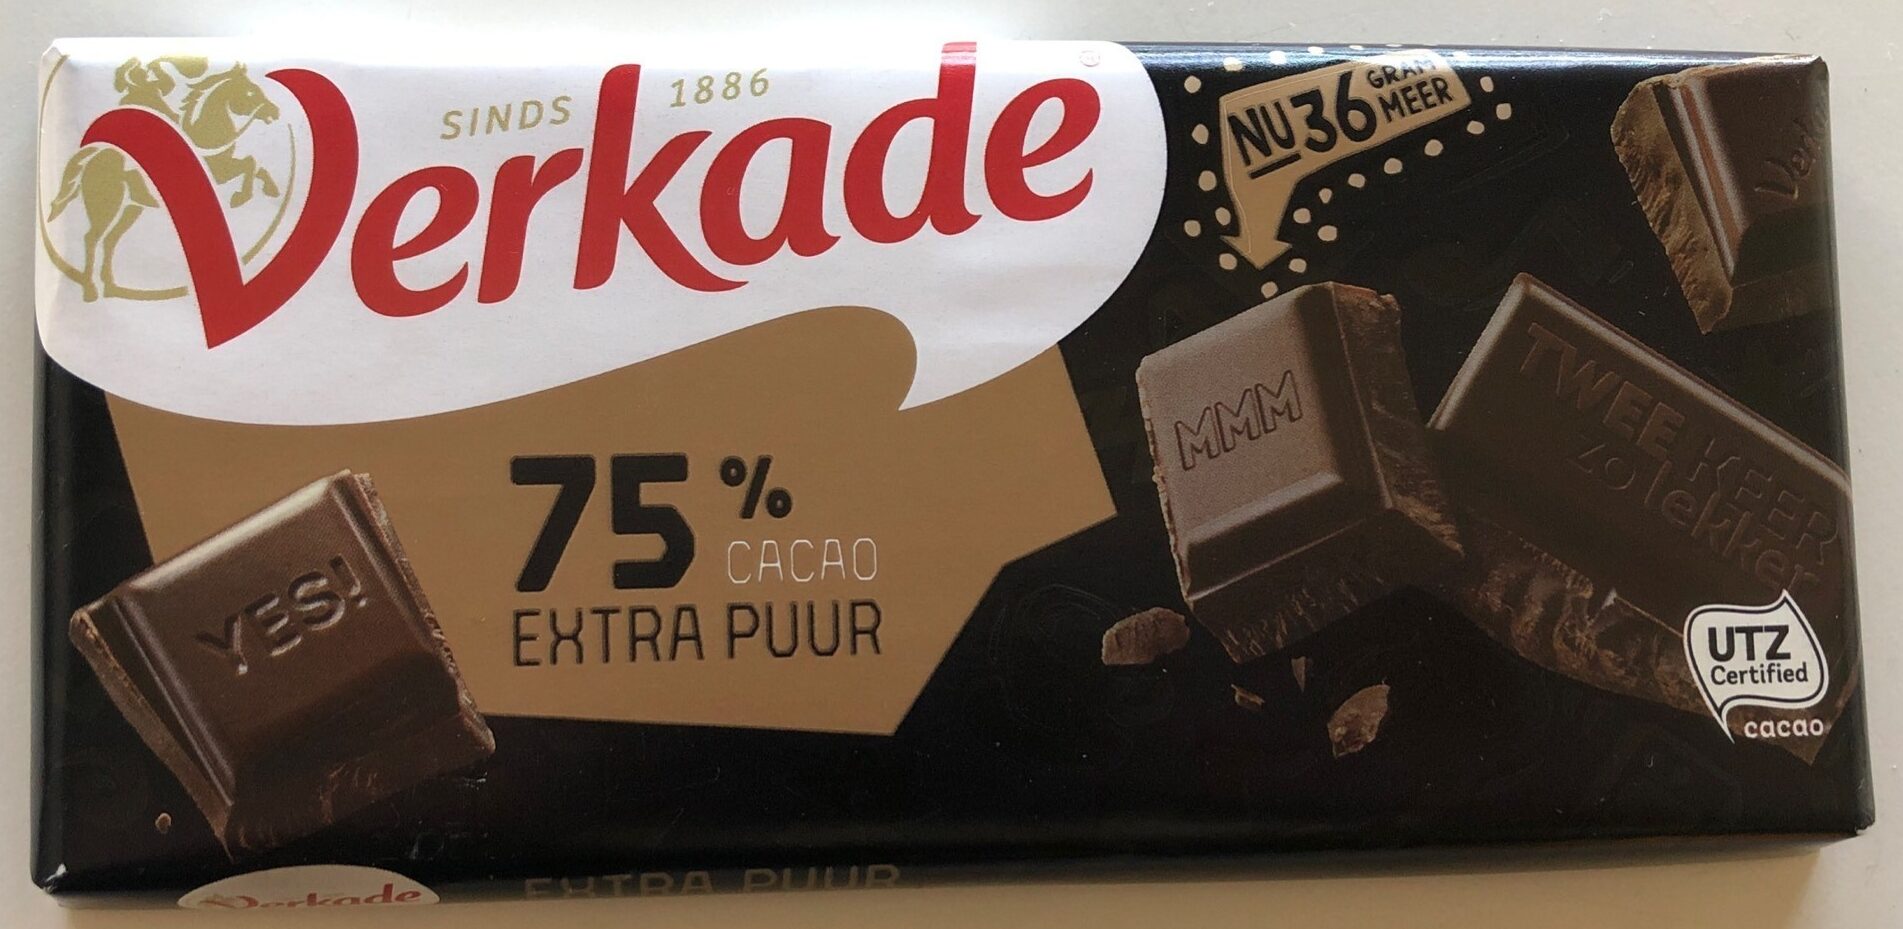 Chocolate - Product - en